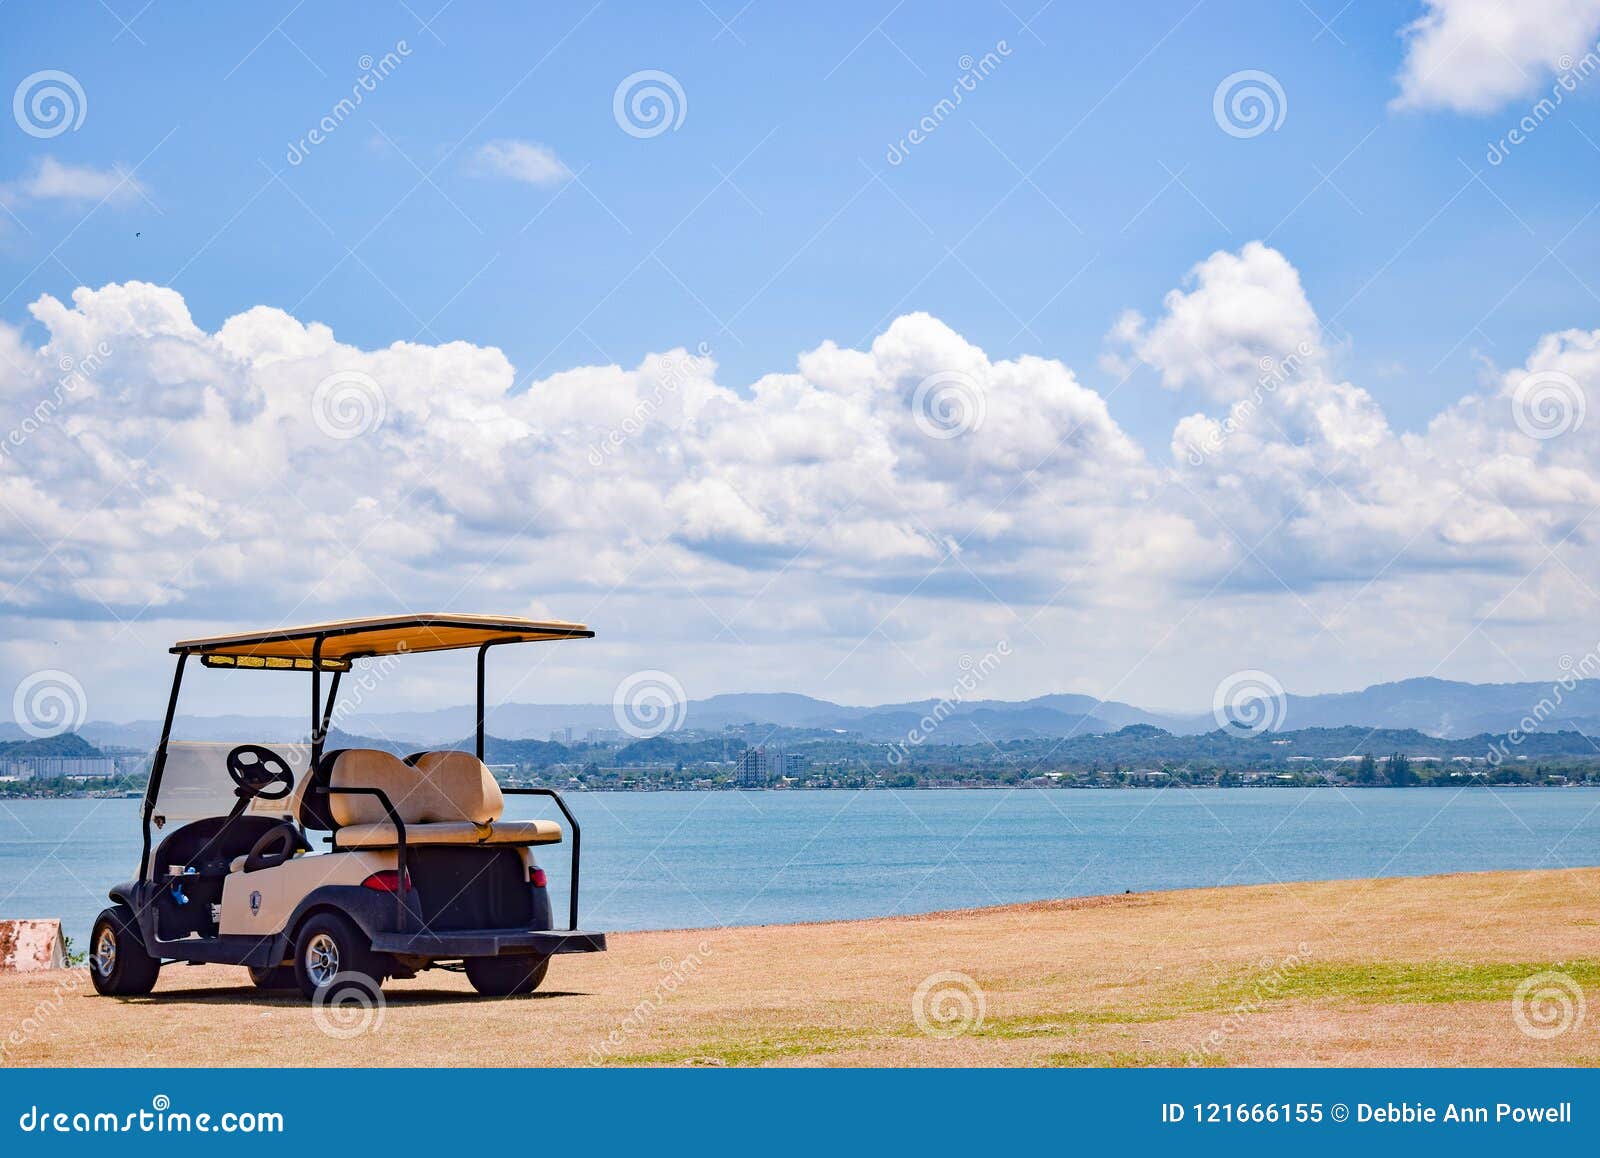 san juan, puerto rico - april 02 2014: parked empty golf cart